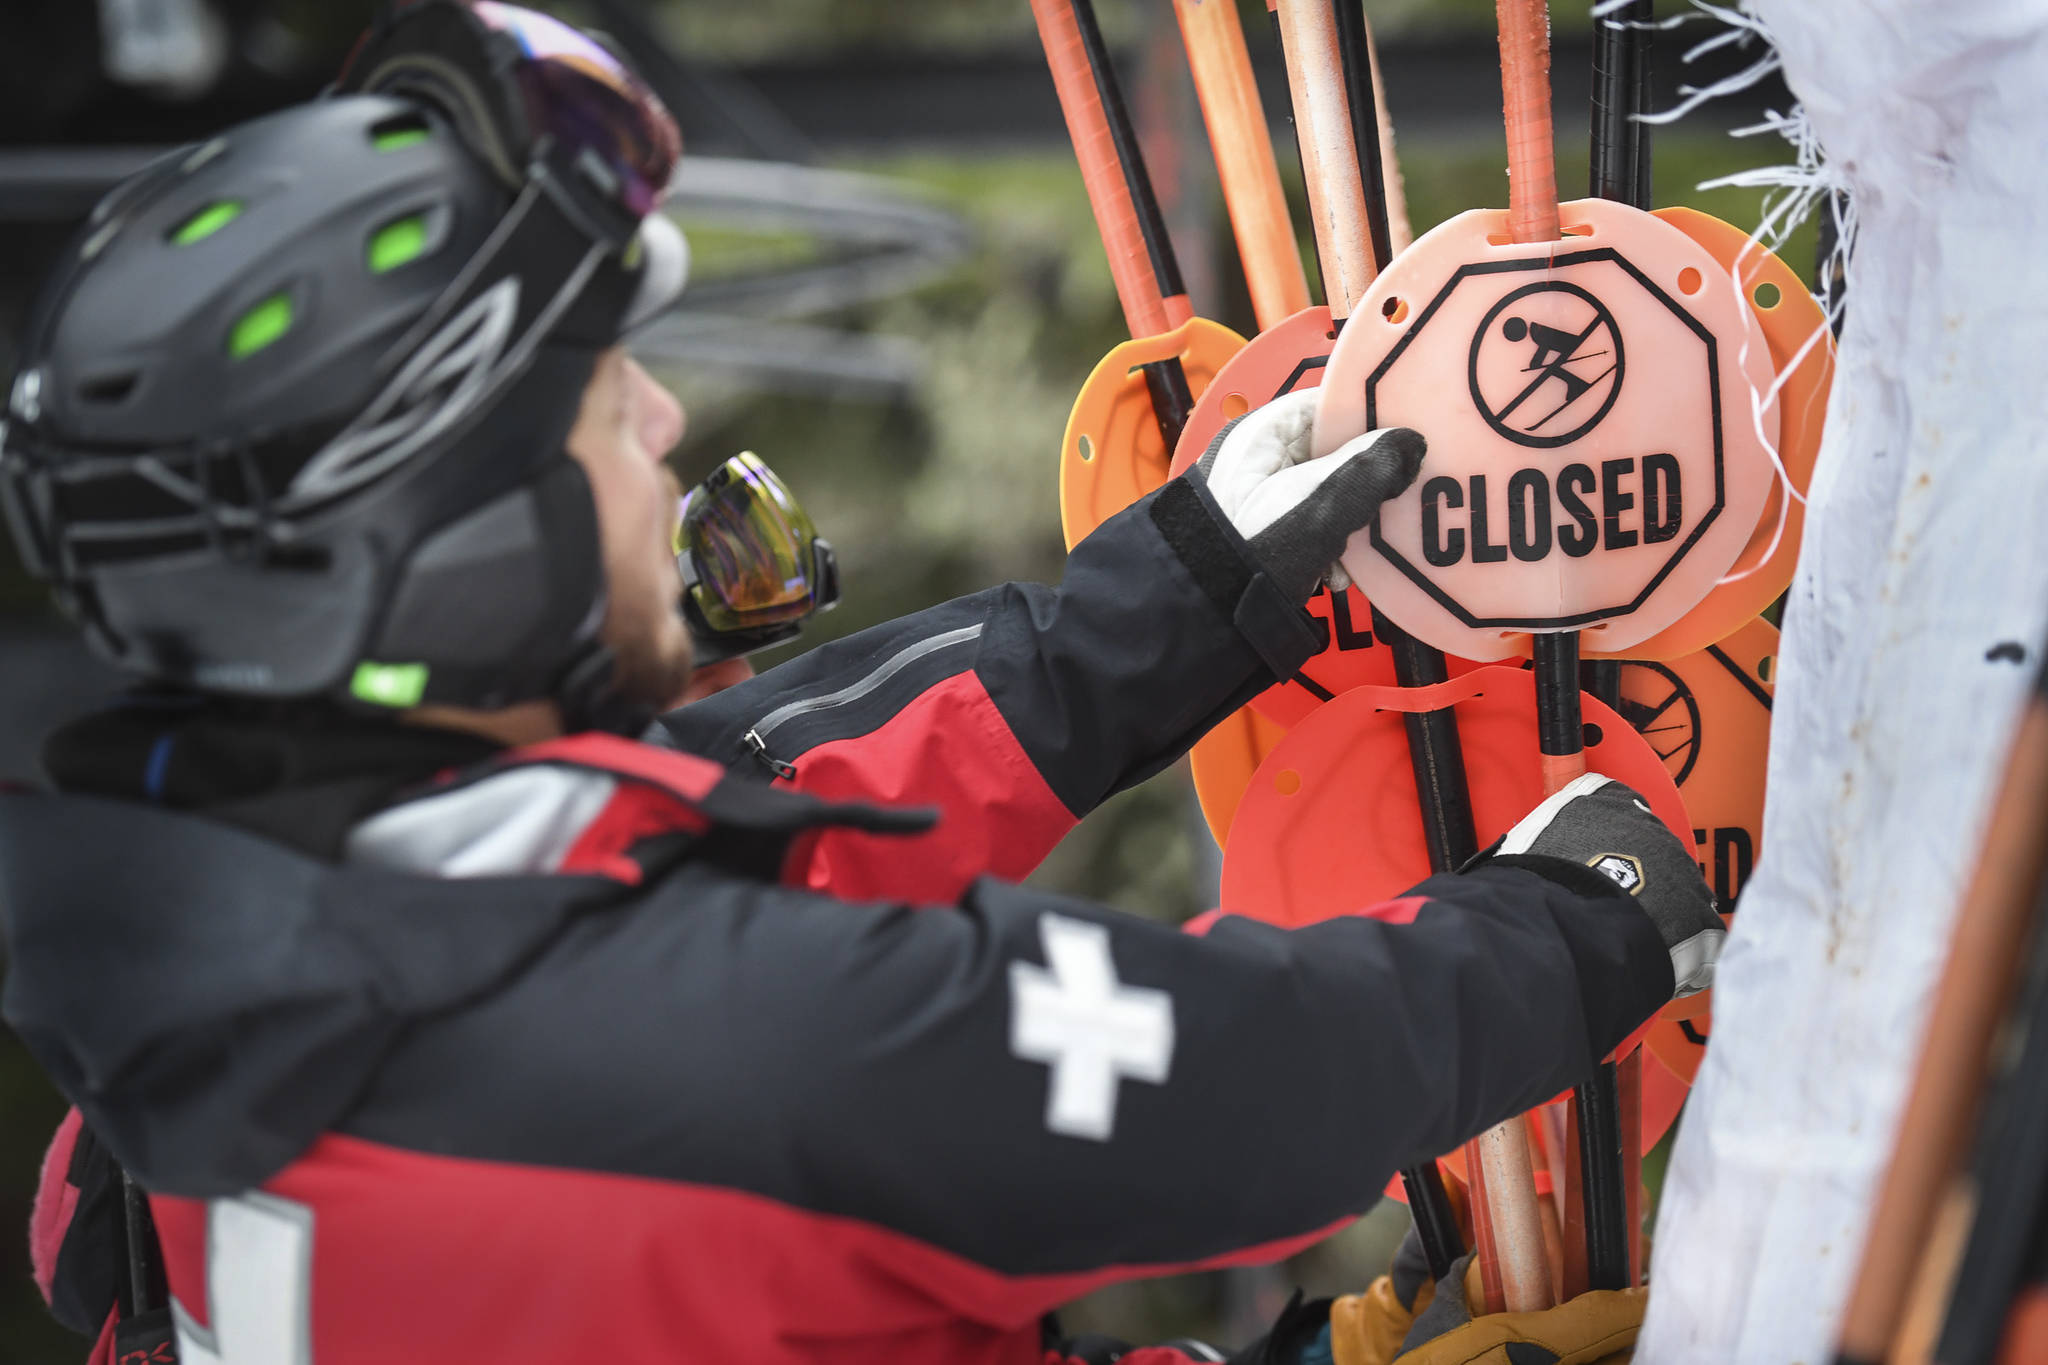 Ski Patroller Calder Otsea takes apart bamboo hazard markers at Eaglecrest Ski Area on Thursday, Dec. 12, 2019. (Michael Penn | Juneau Empire)